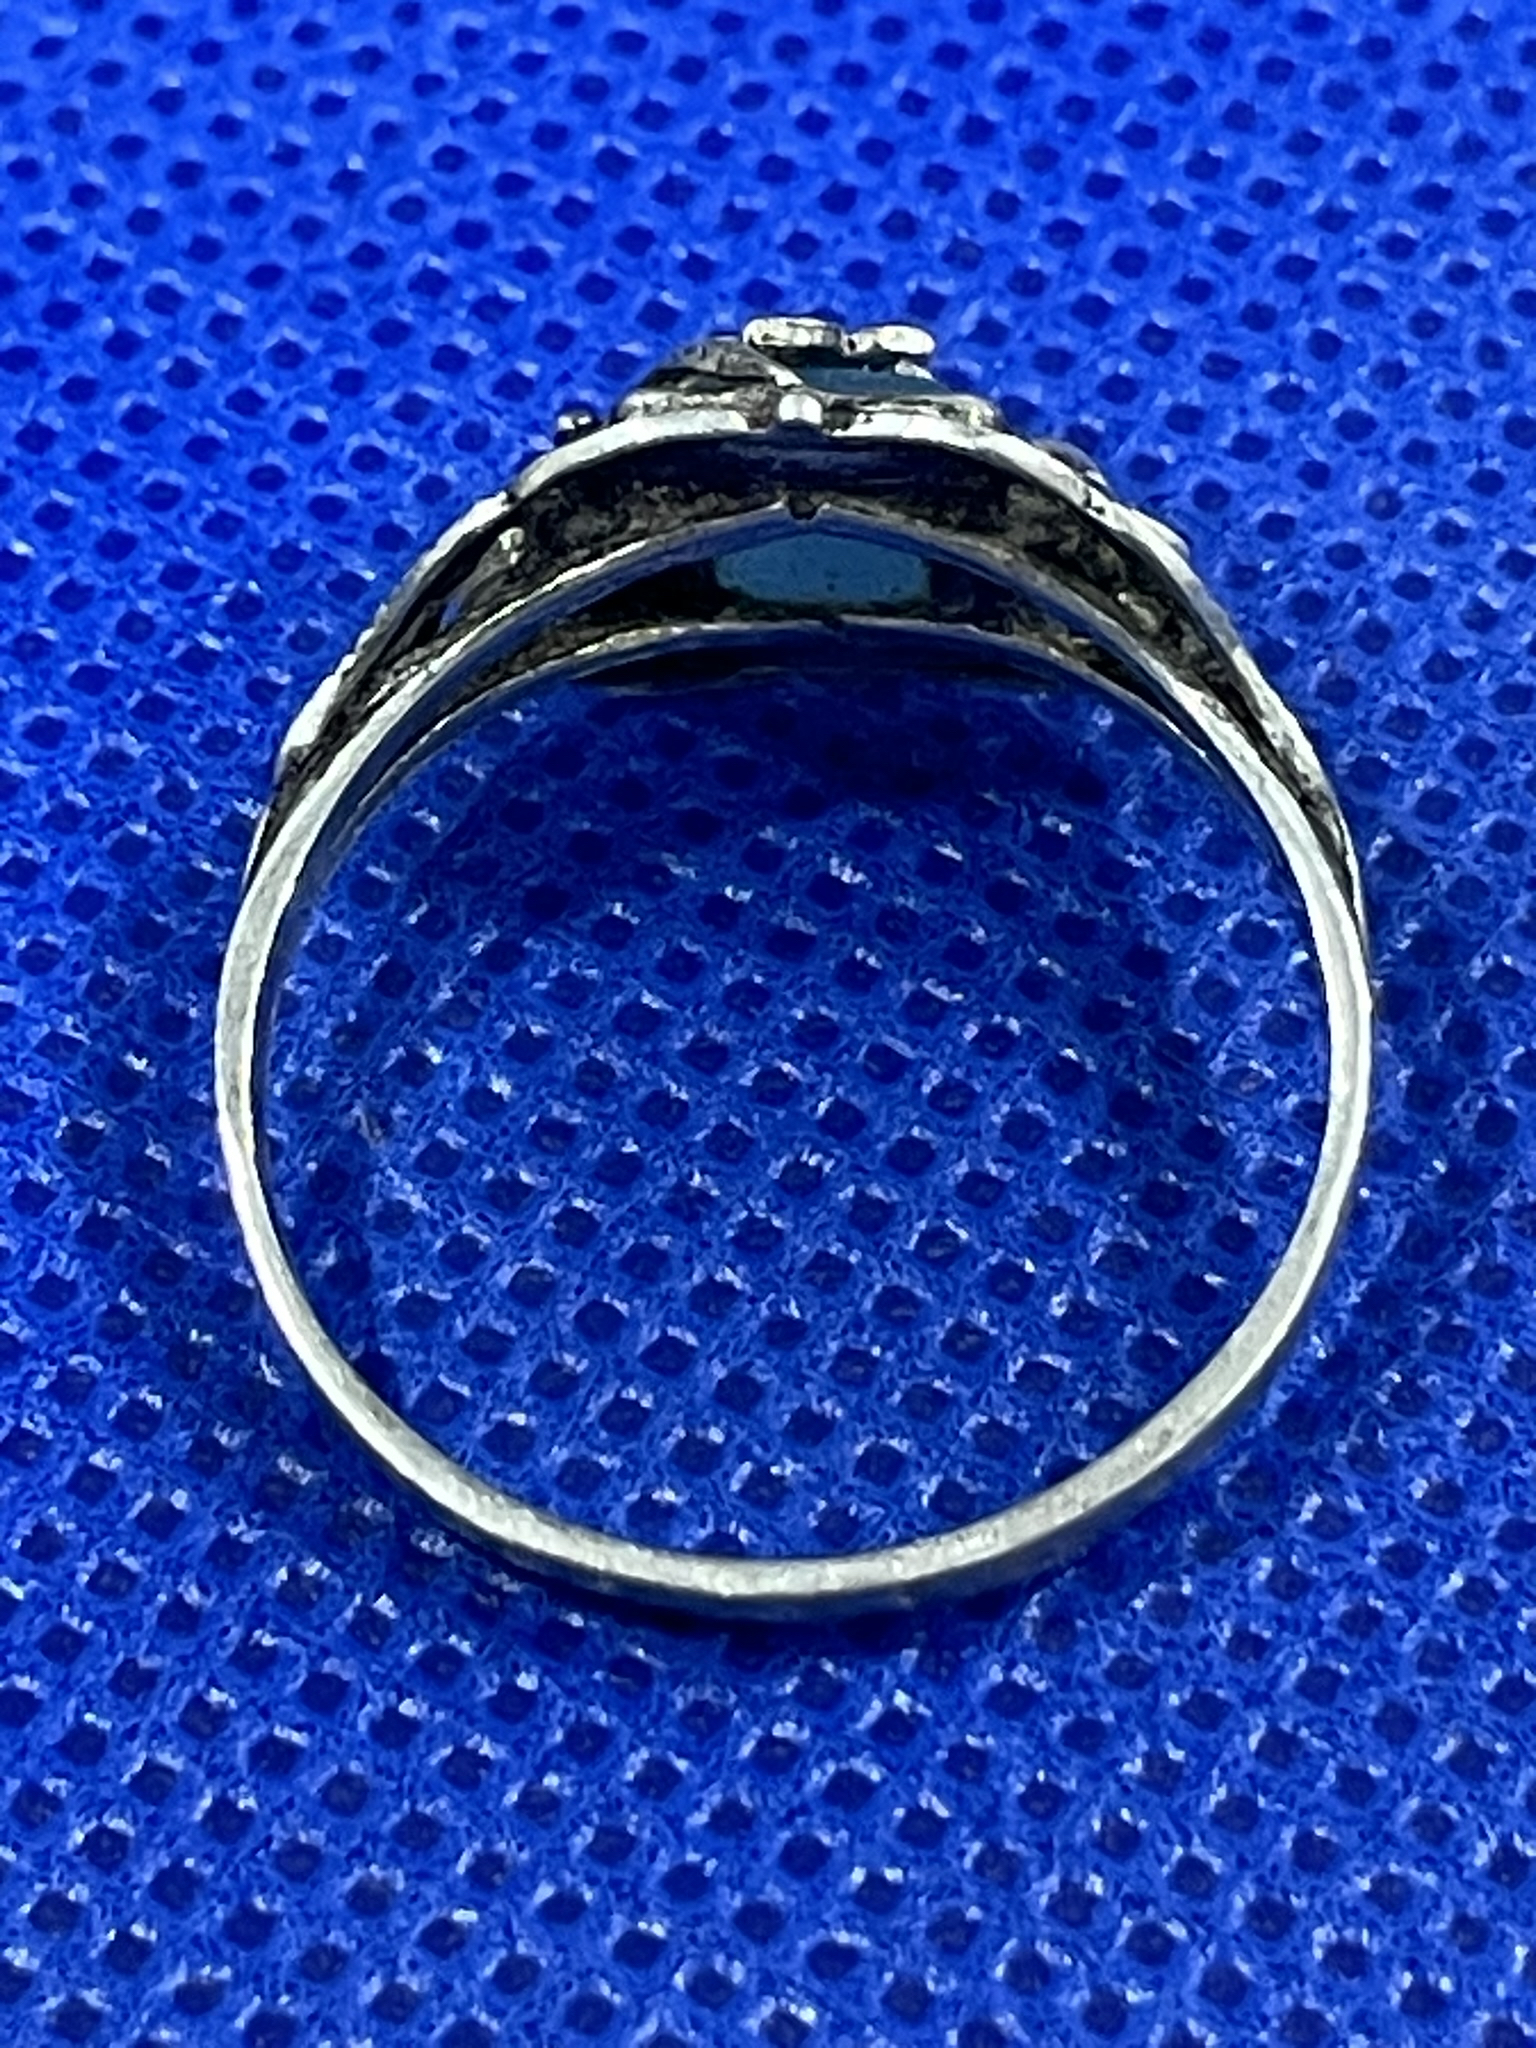 Vintage 925 silver ring